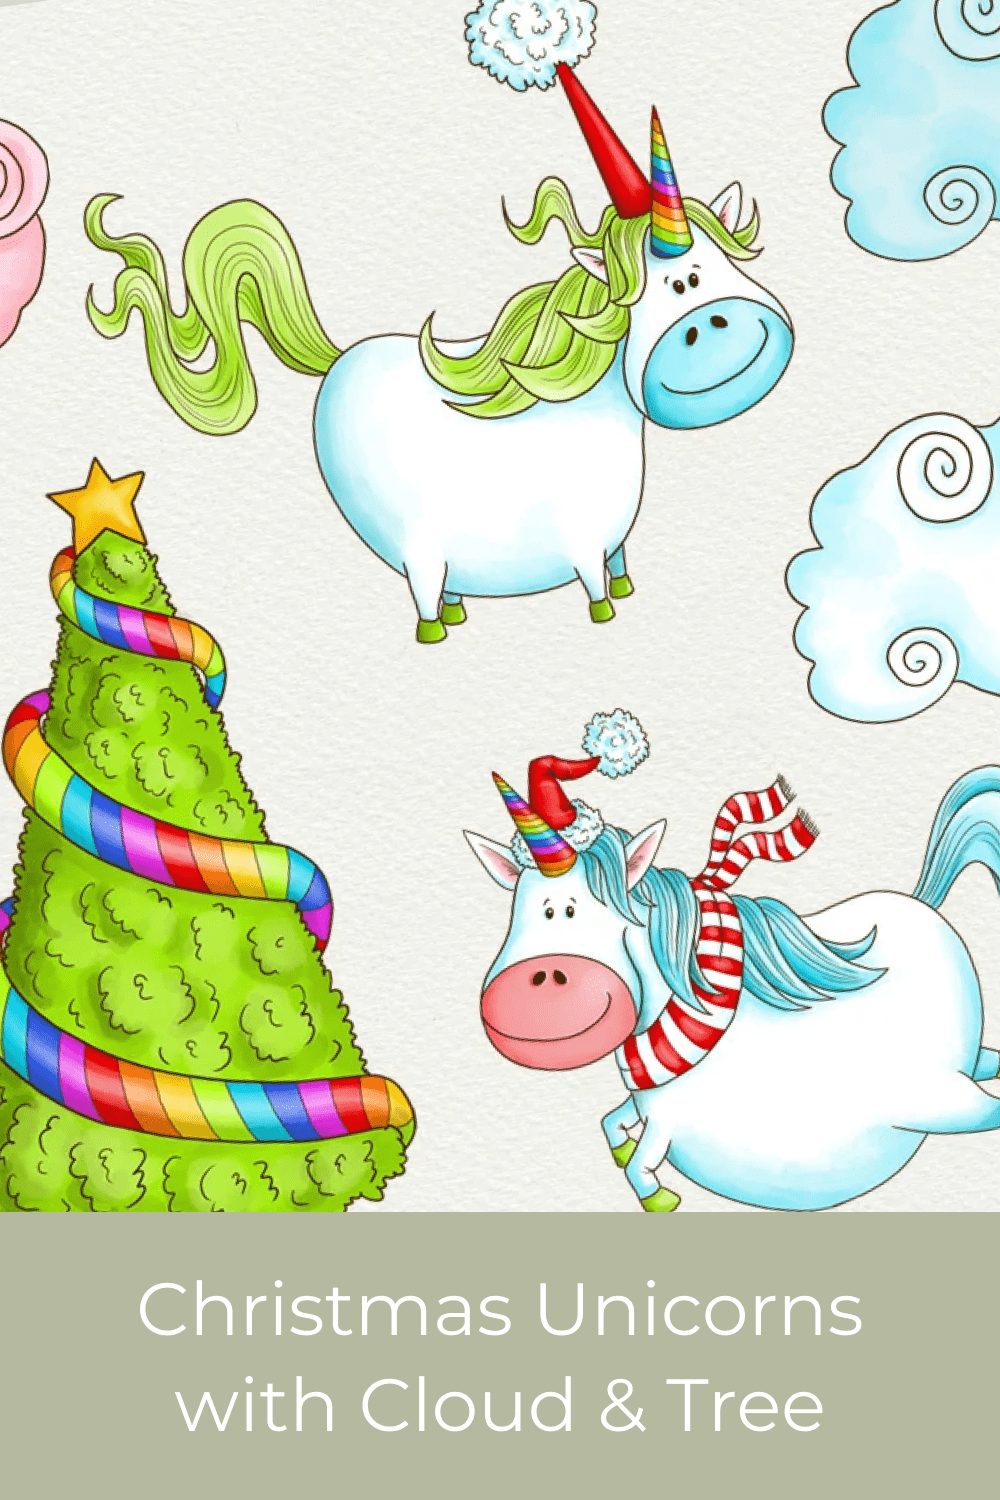 Christmas Unicorns with Cloud & Tree.